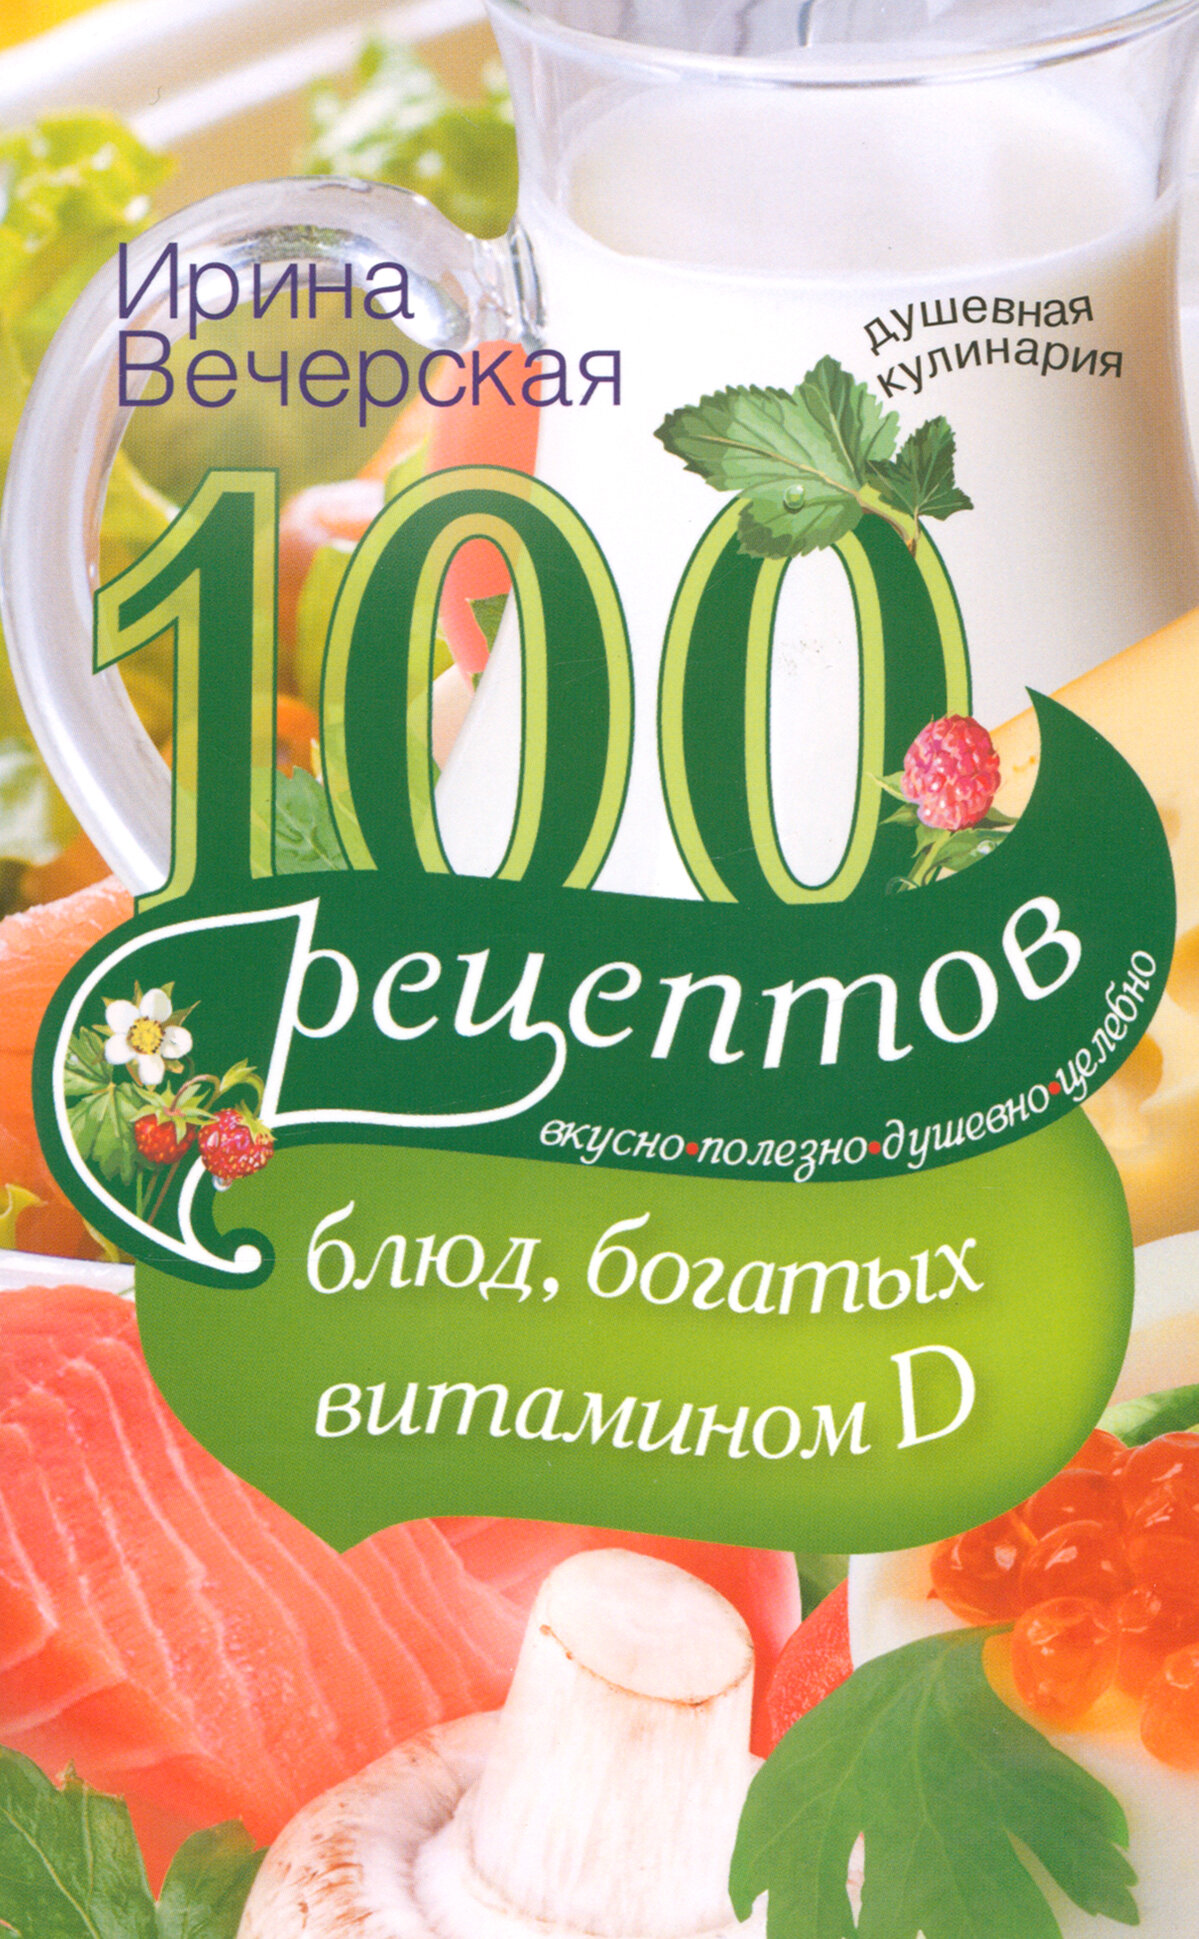 100 рецептов блюд, богатыми витамином Д. Вкусно, полезно, душевно, целебно - фото №2